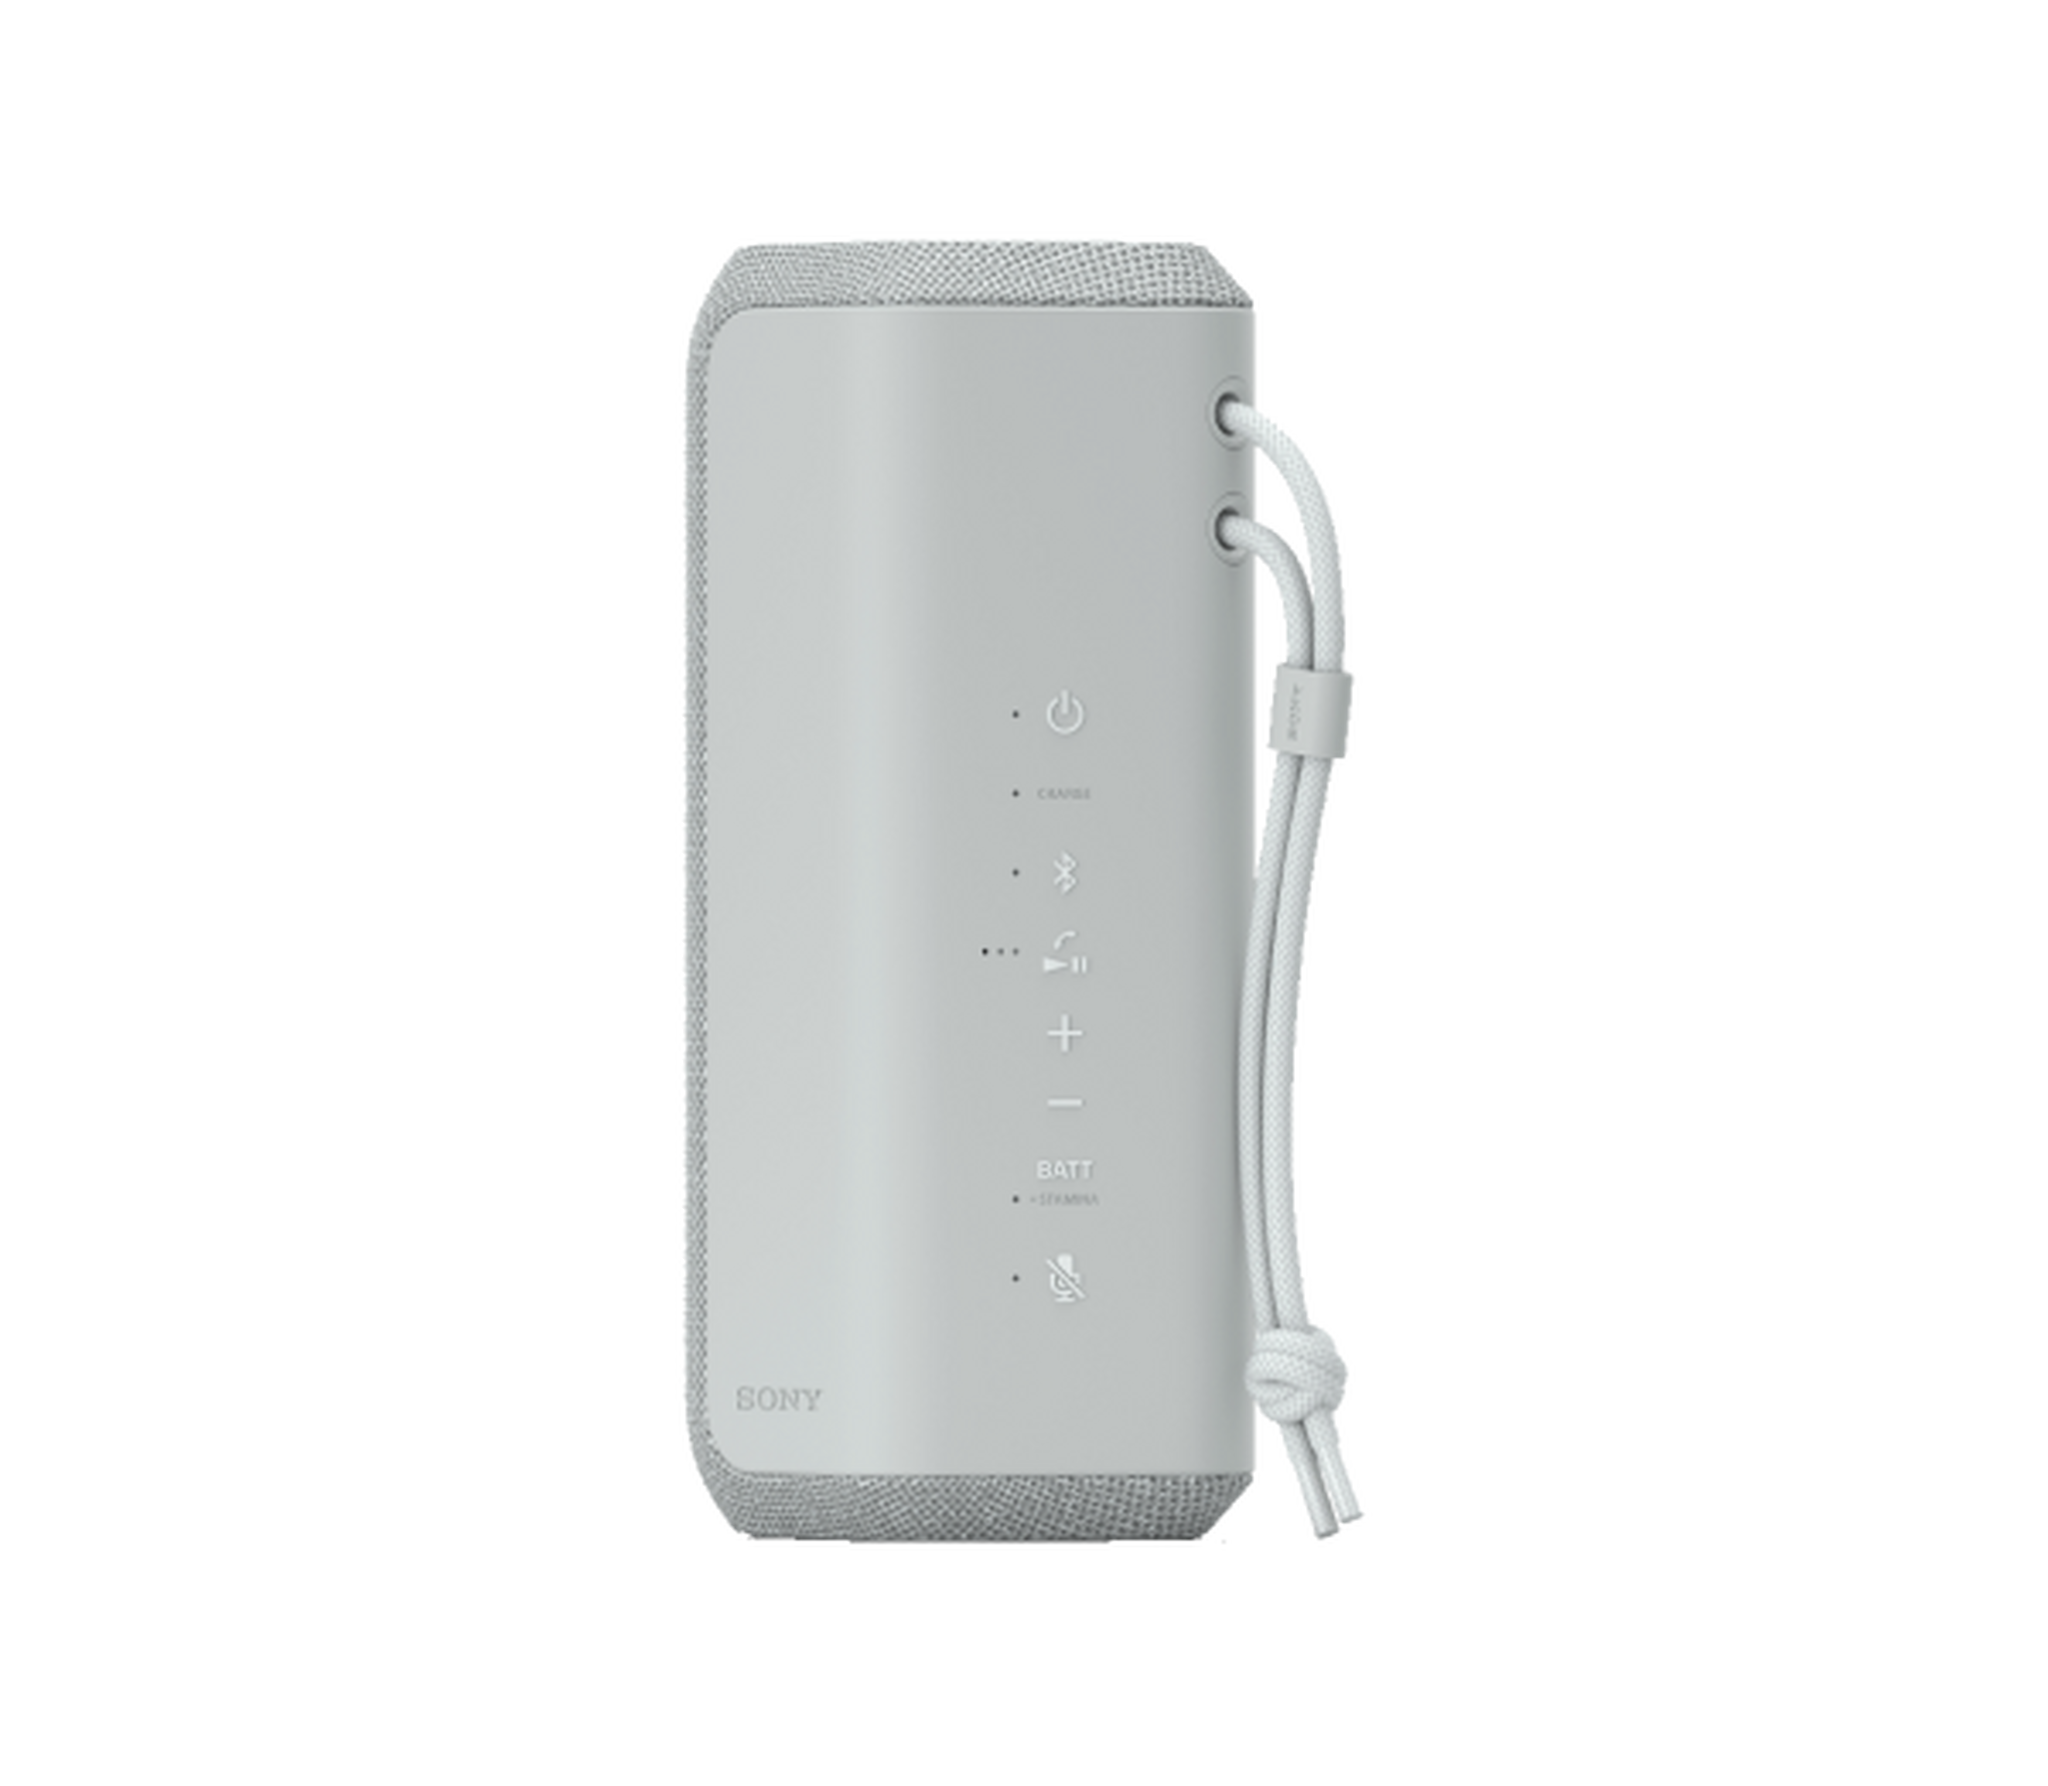 Sony Portable Bluetooth Speaker - Grey